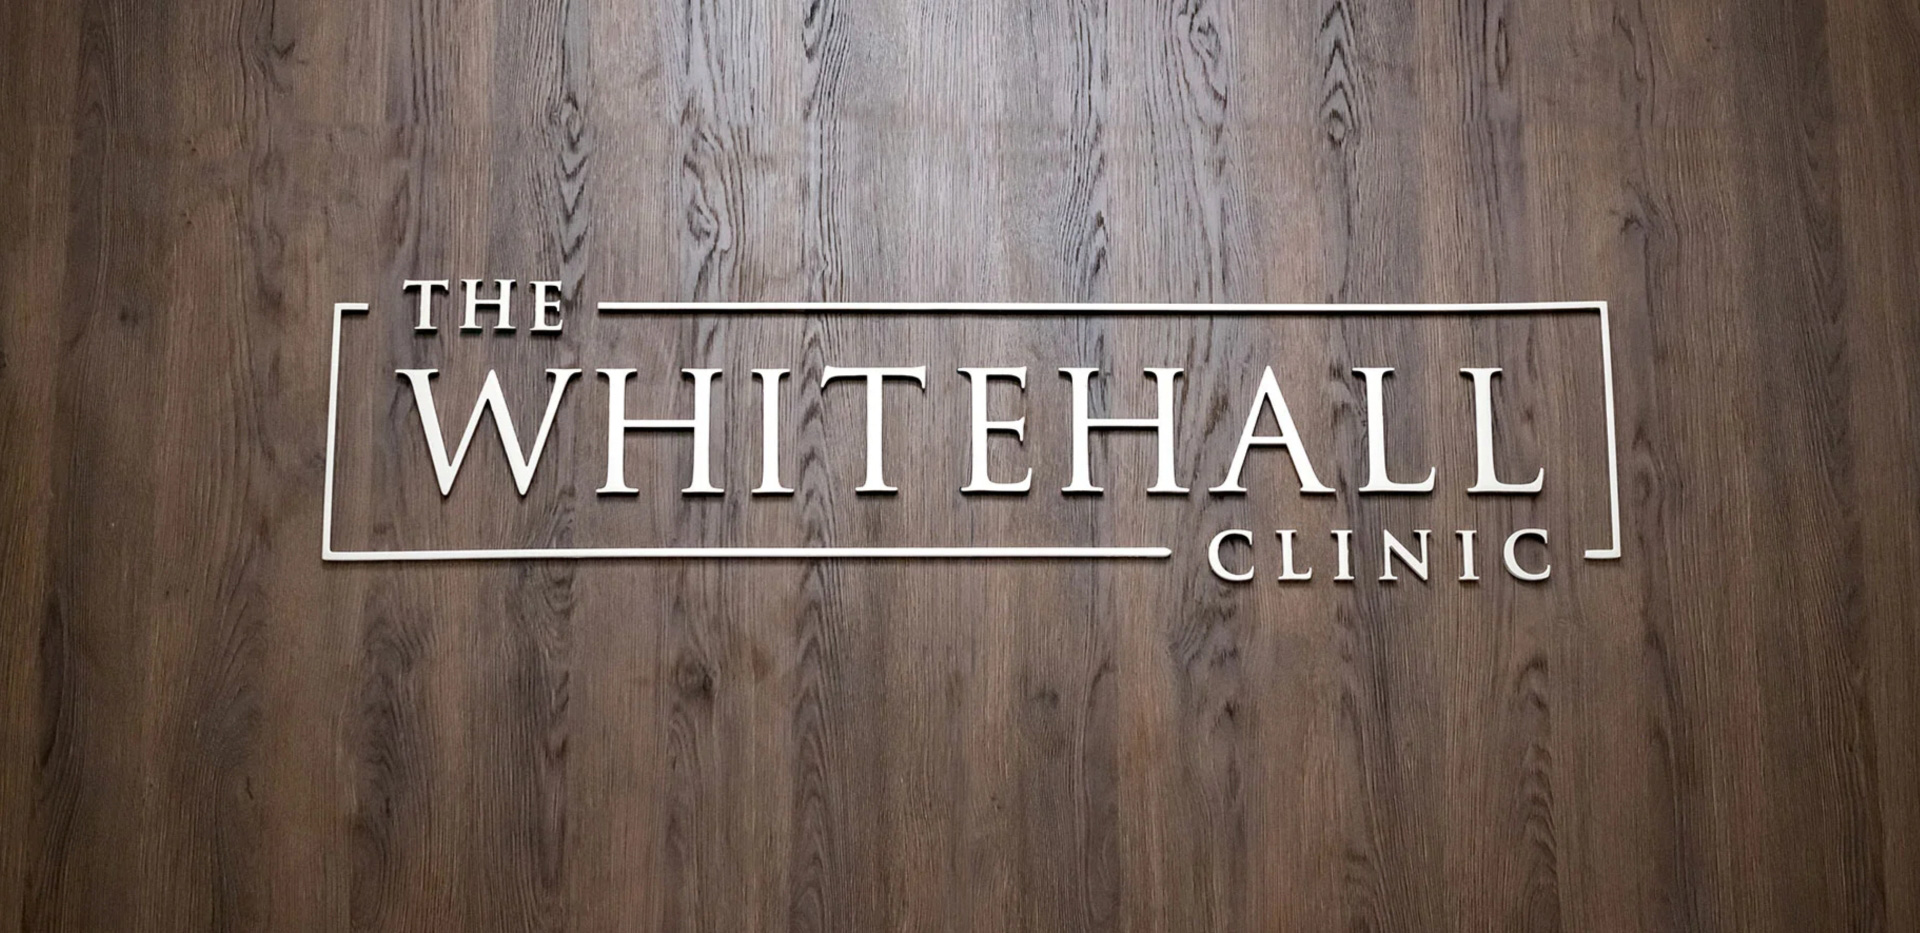 Whitehall Clinic logo on wall